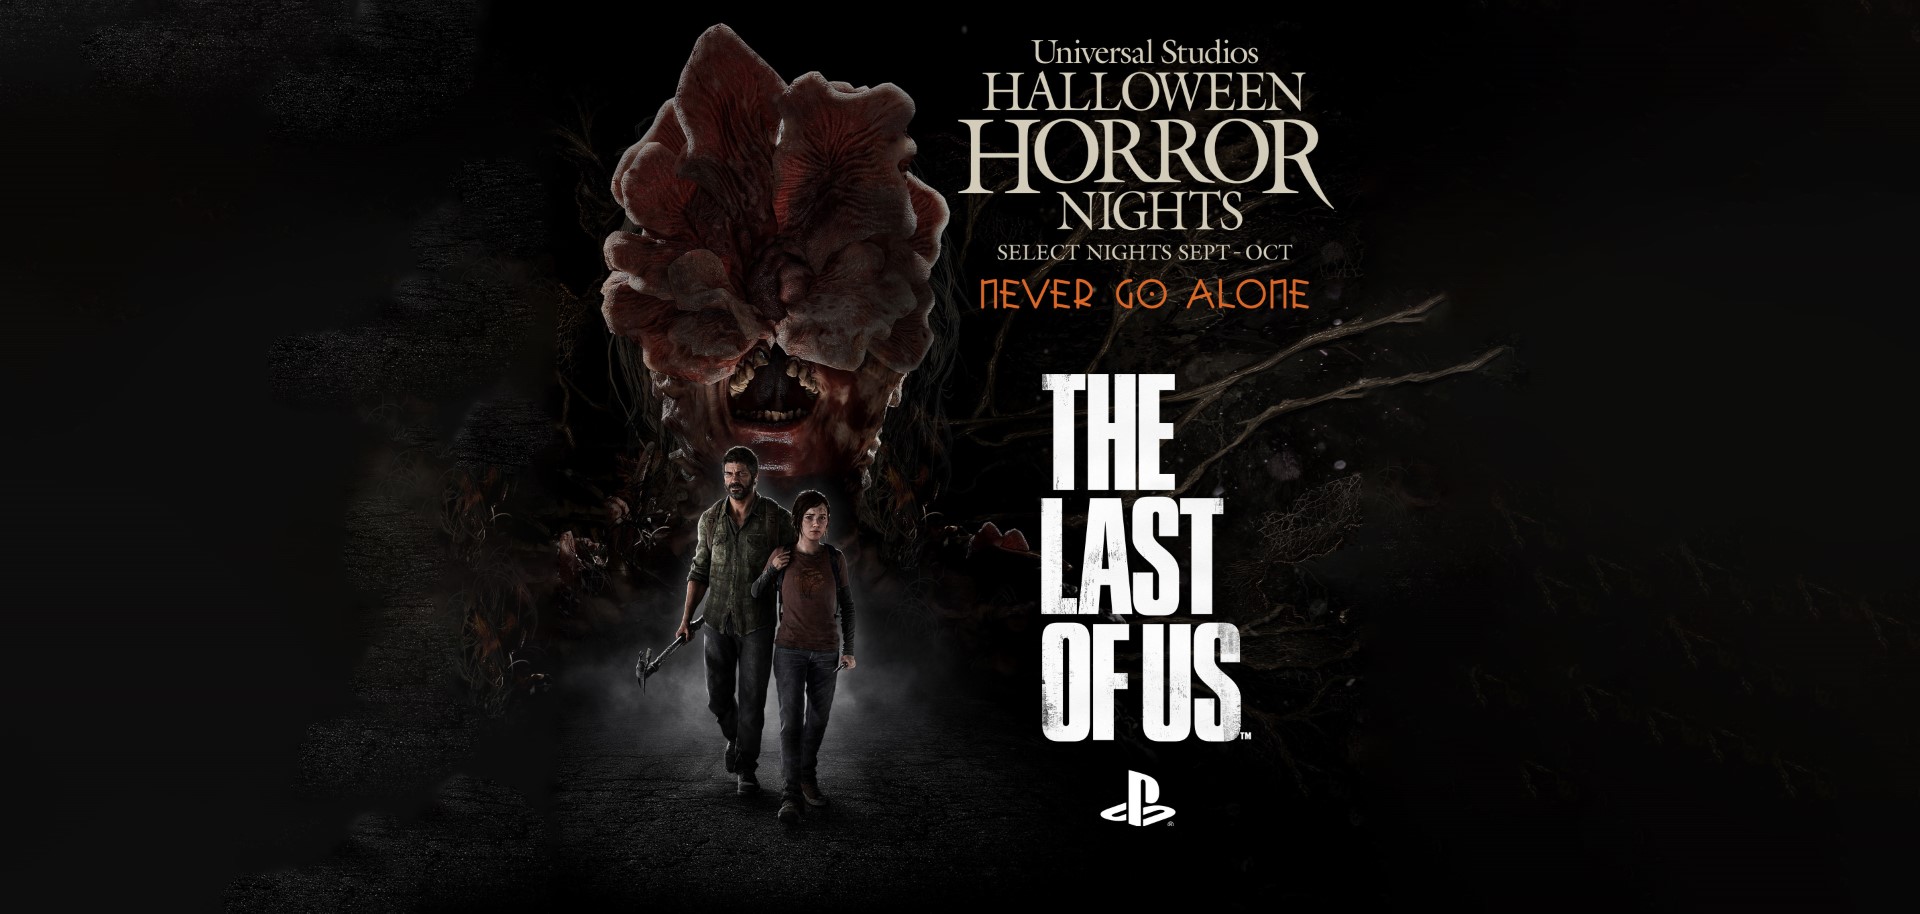 The Last of Us Universal Studios Halloween Horror Nights